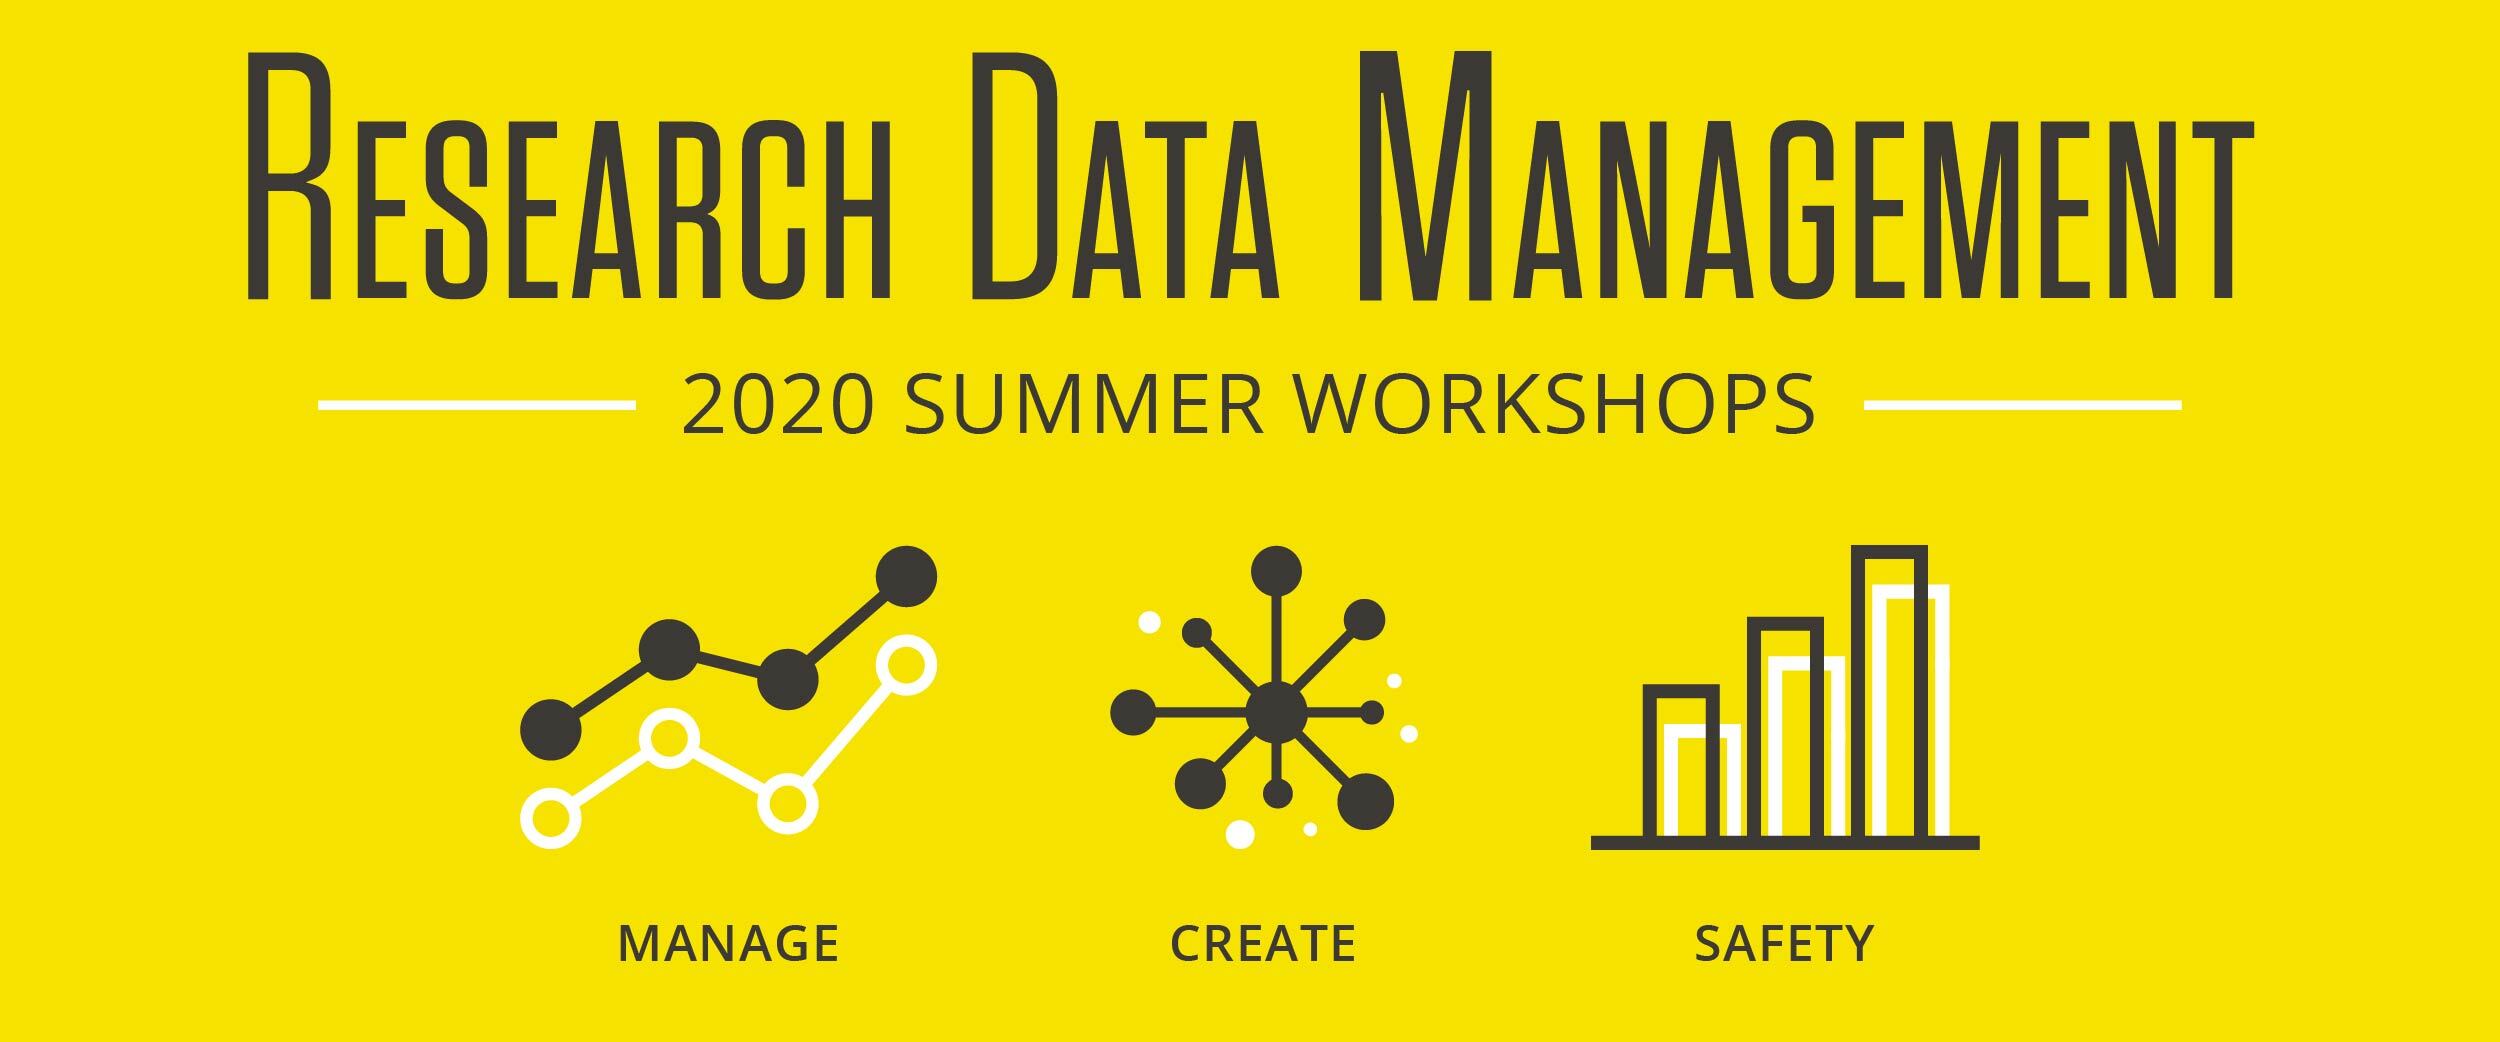 Research Data Management - 2020 Summer Workshops